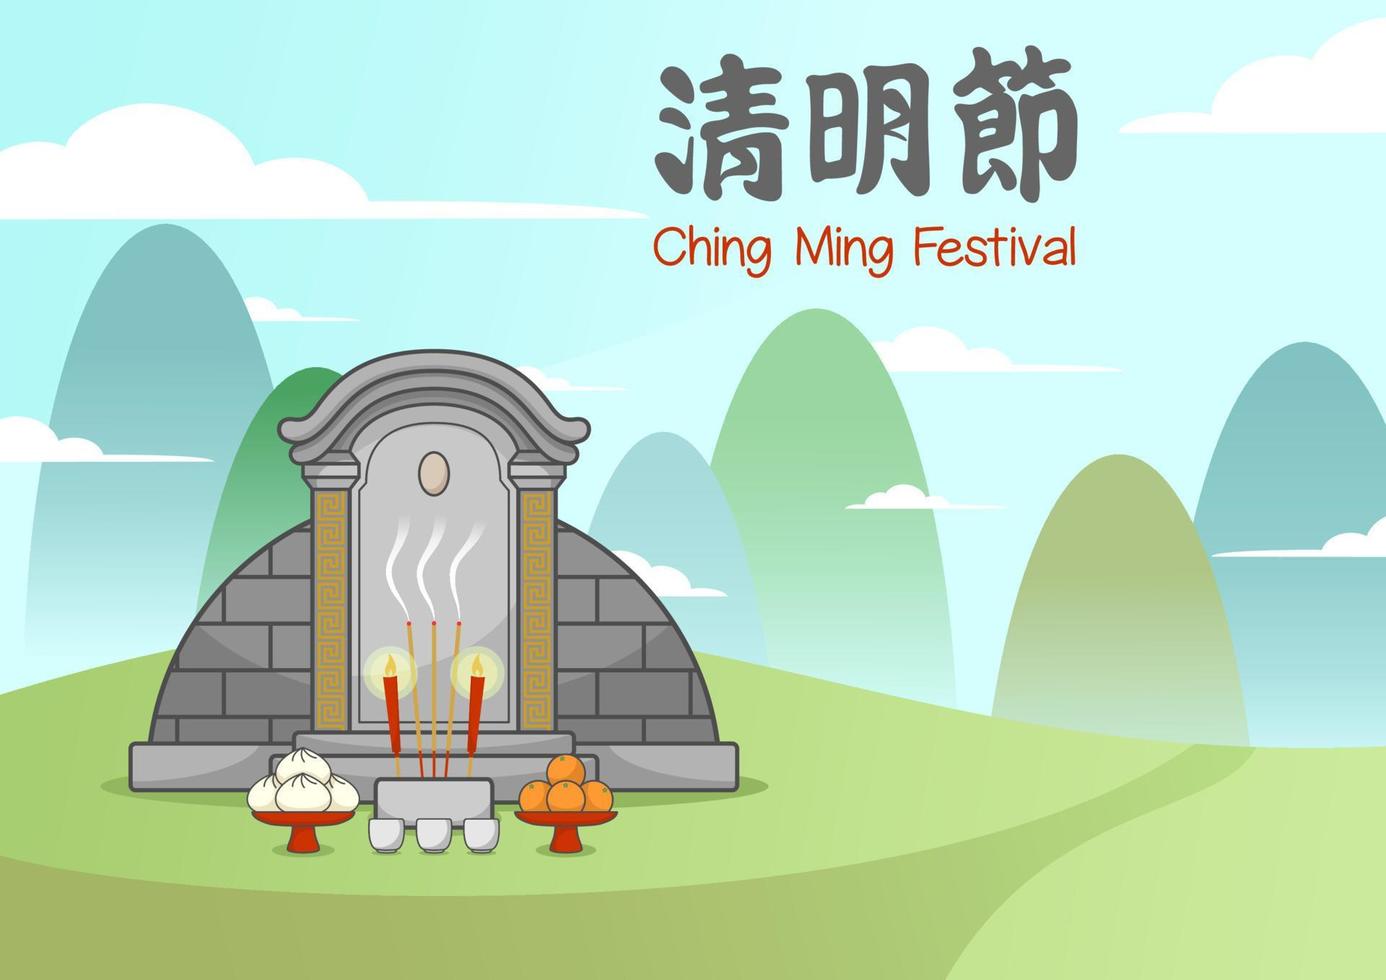 sepultura chinesa do festival de ching ming vetor